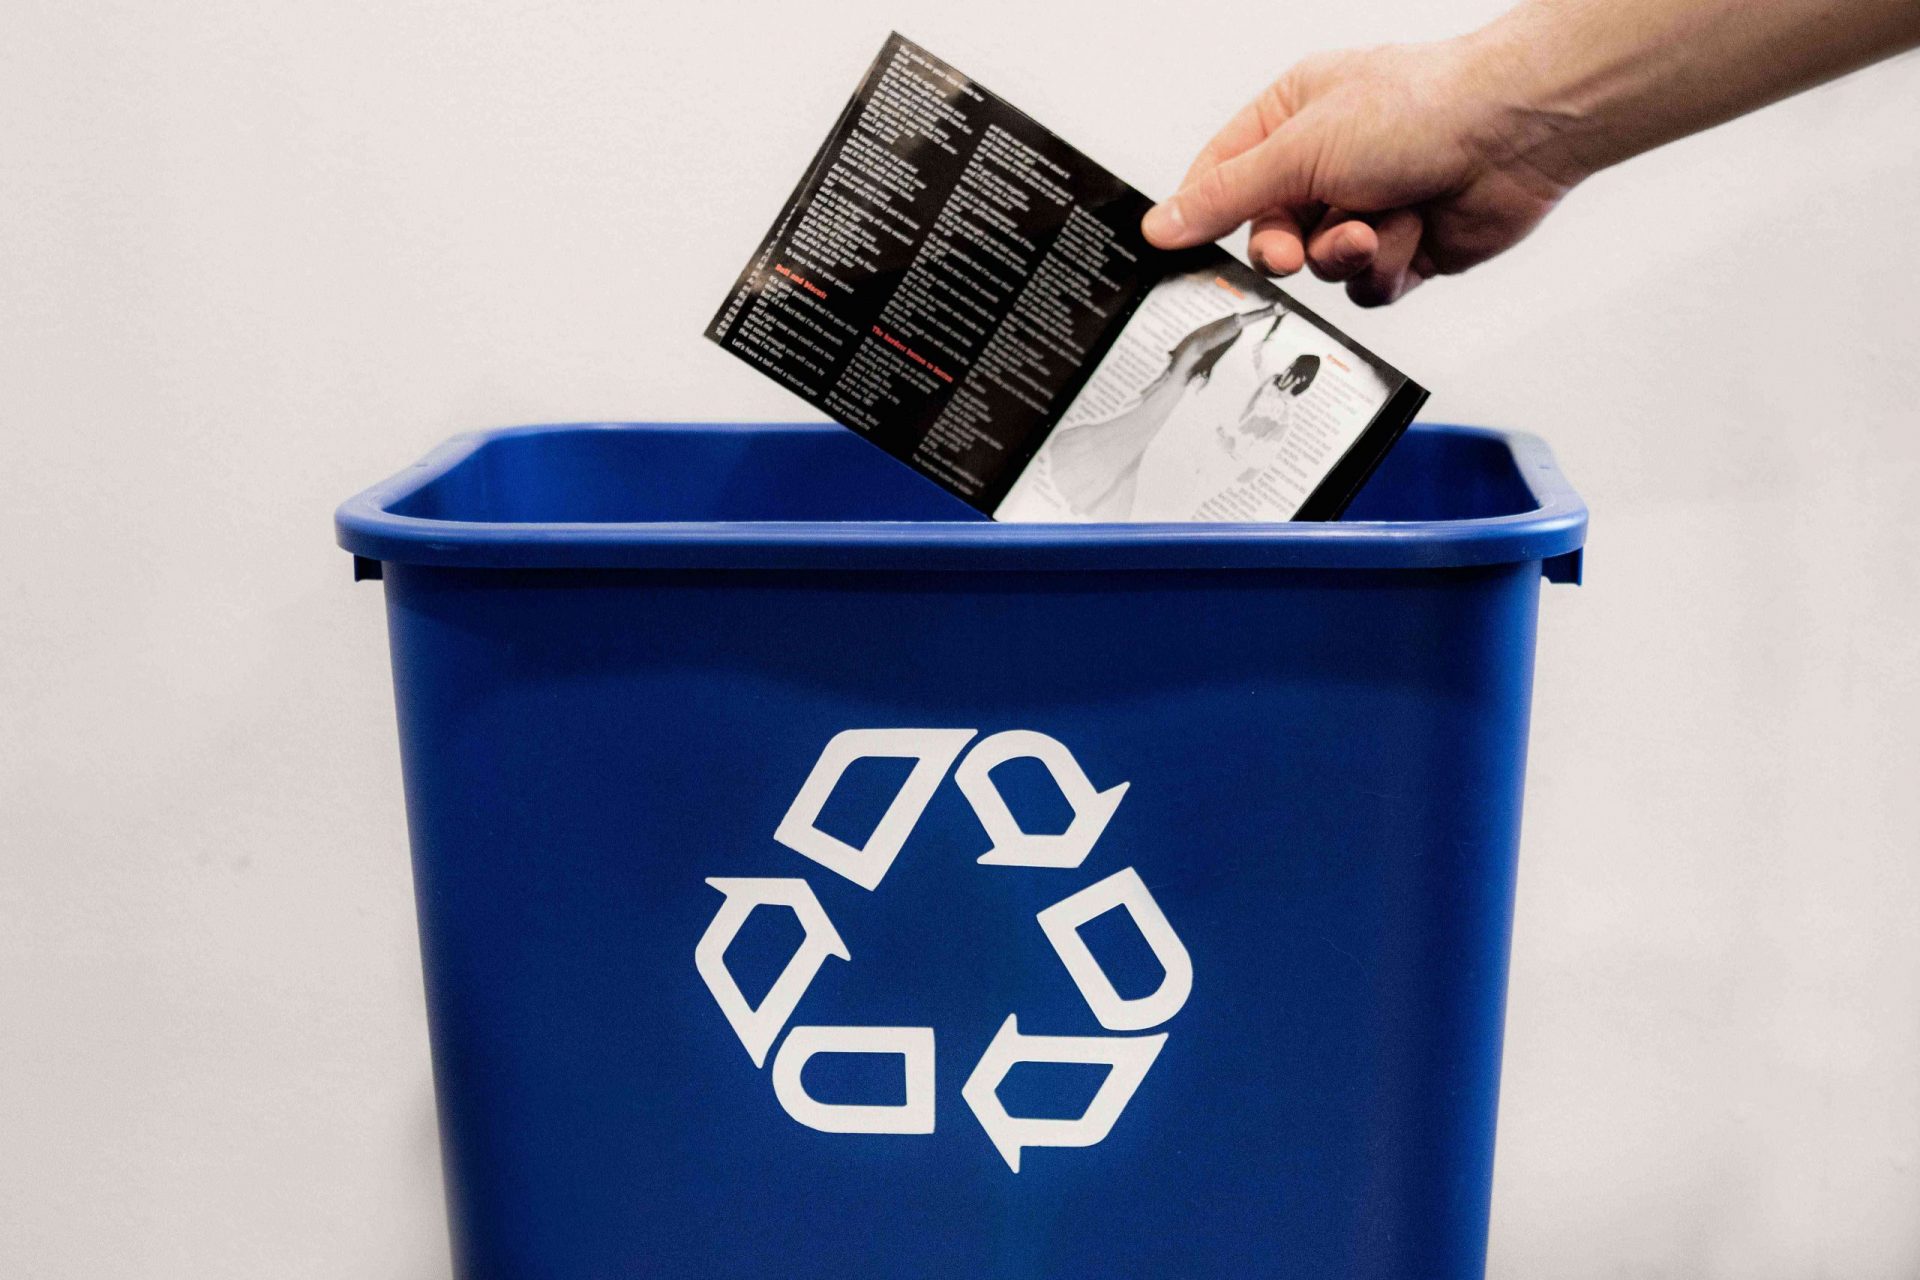 la mano deja caer el papel de la caja del CD en el contenedor azul de reciclaje